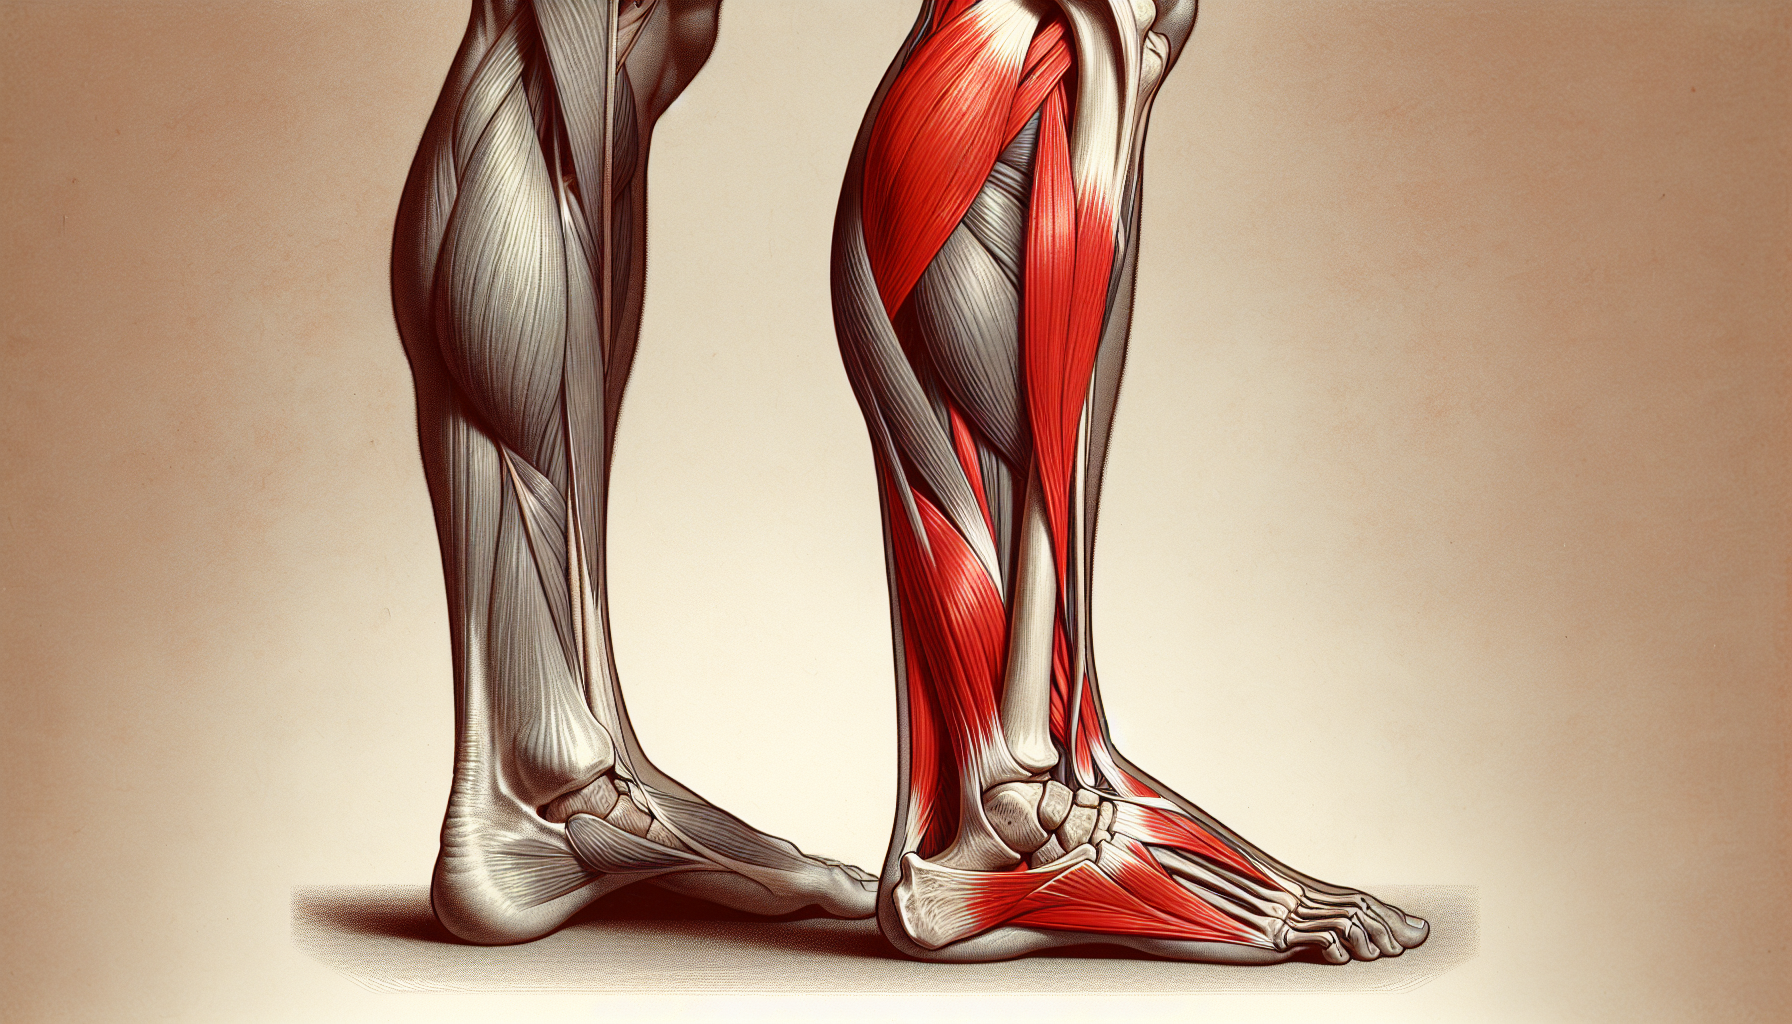 Illustration of the Achilles tendon